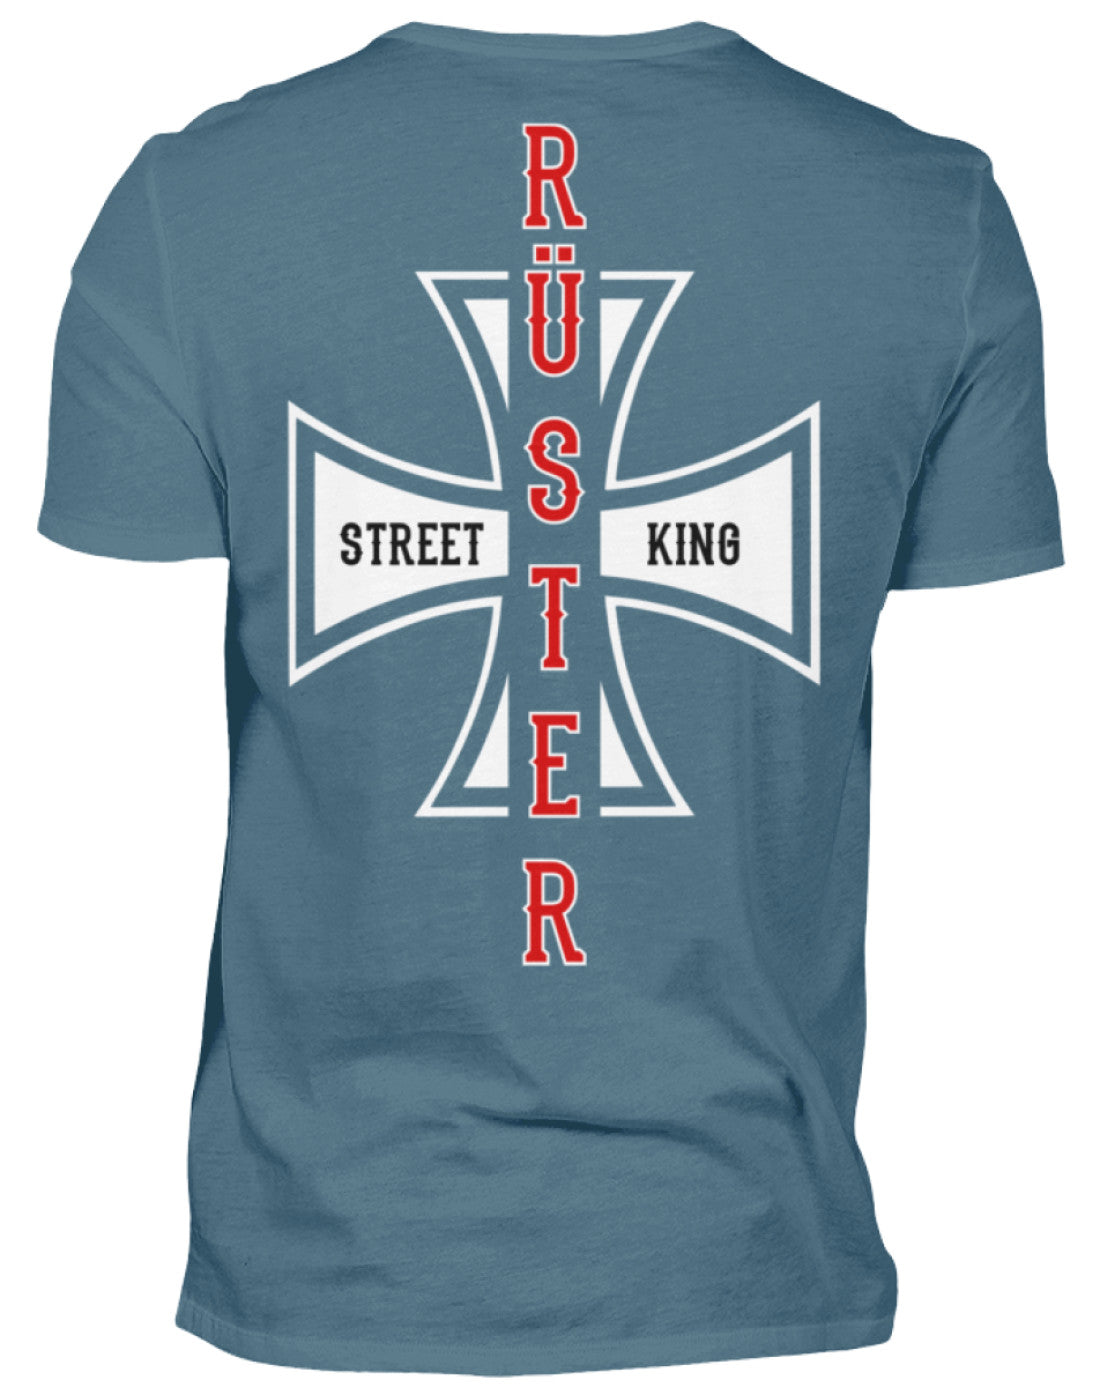 Rüster Street King €29.95 Gerüstbauer - Shop >>